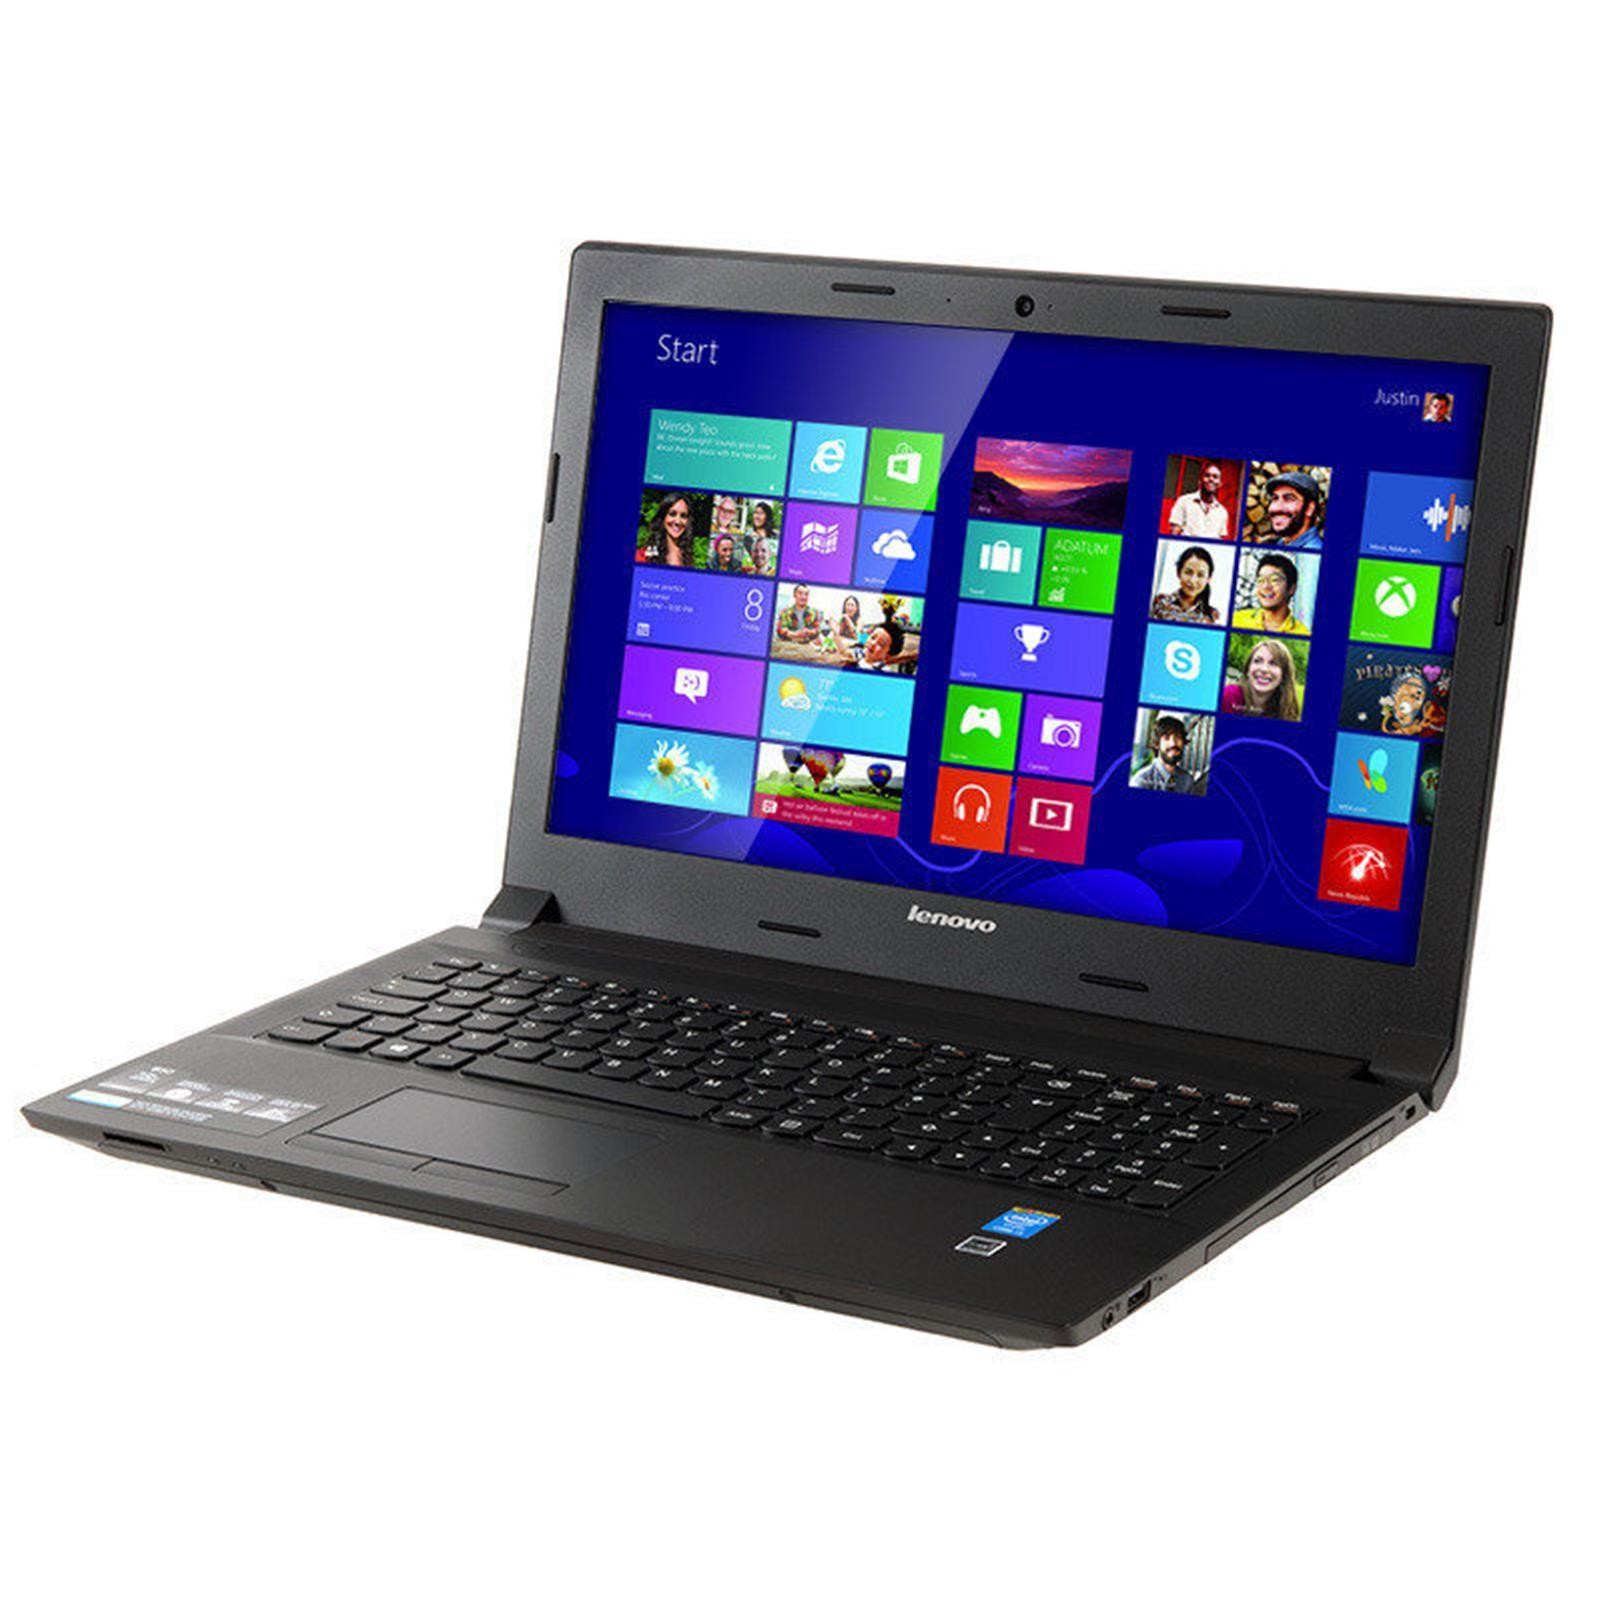 Lenovo B50 10 Windows 7 64bit Drivers Driver Laptop Update